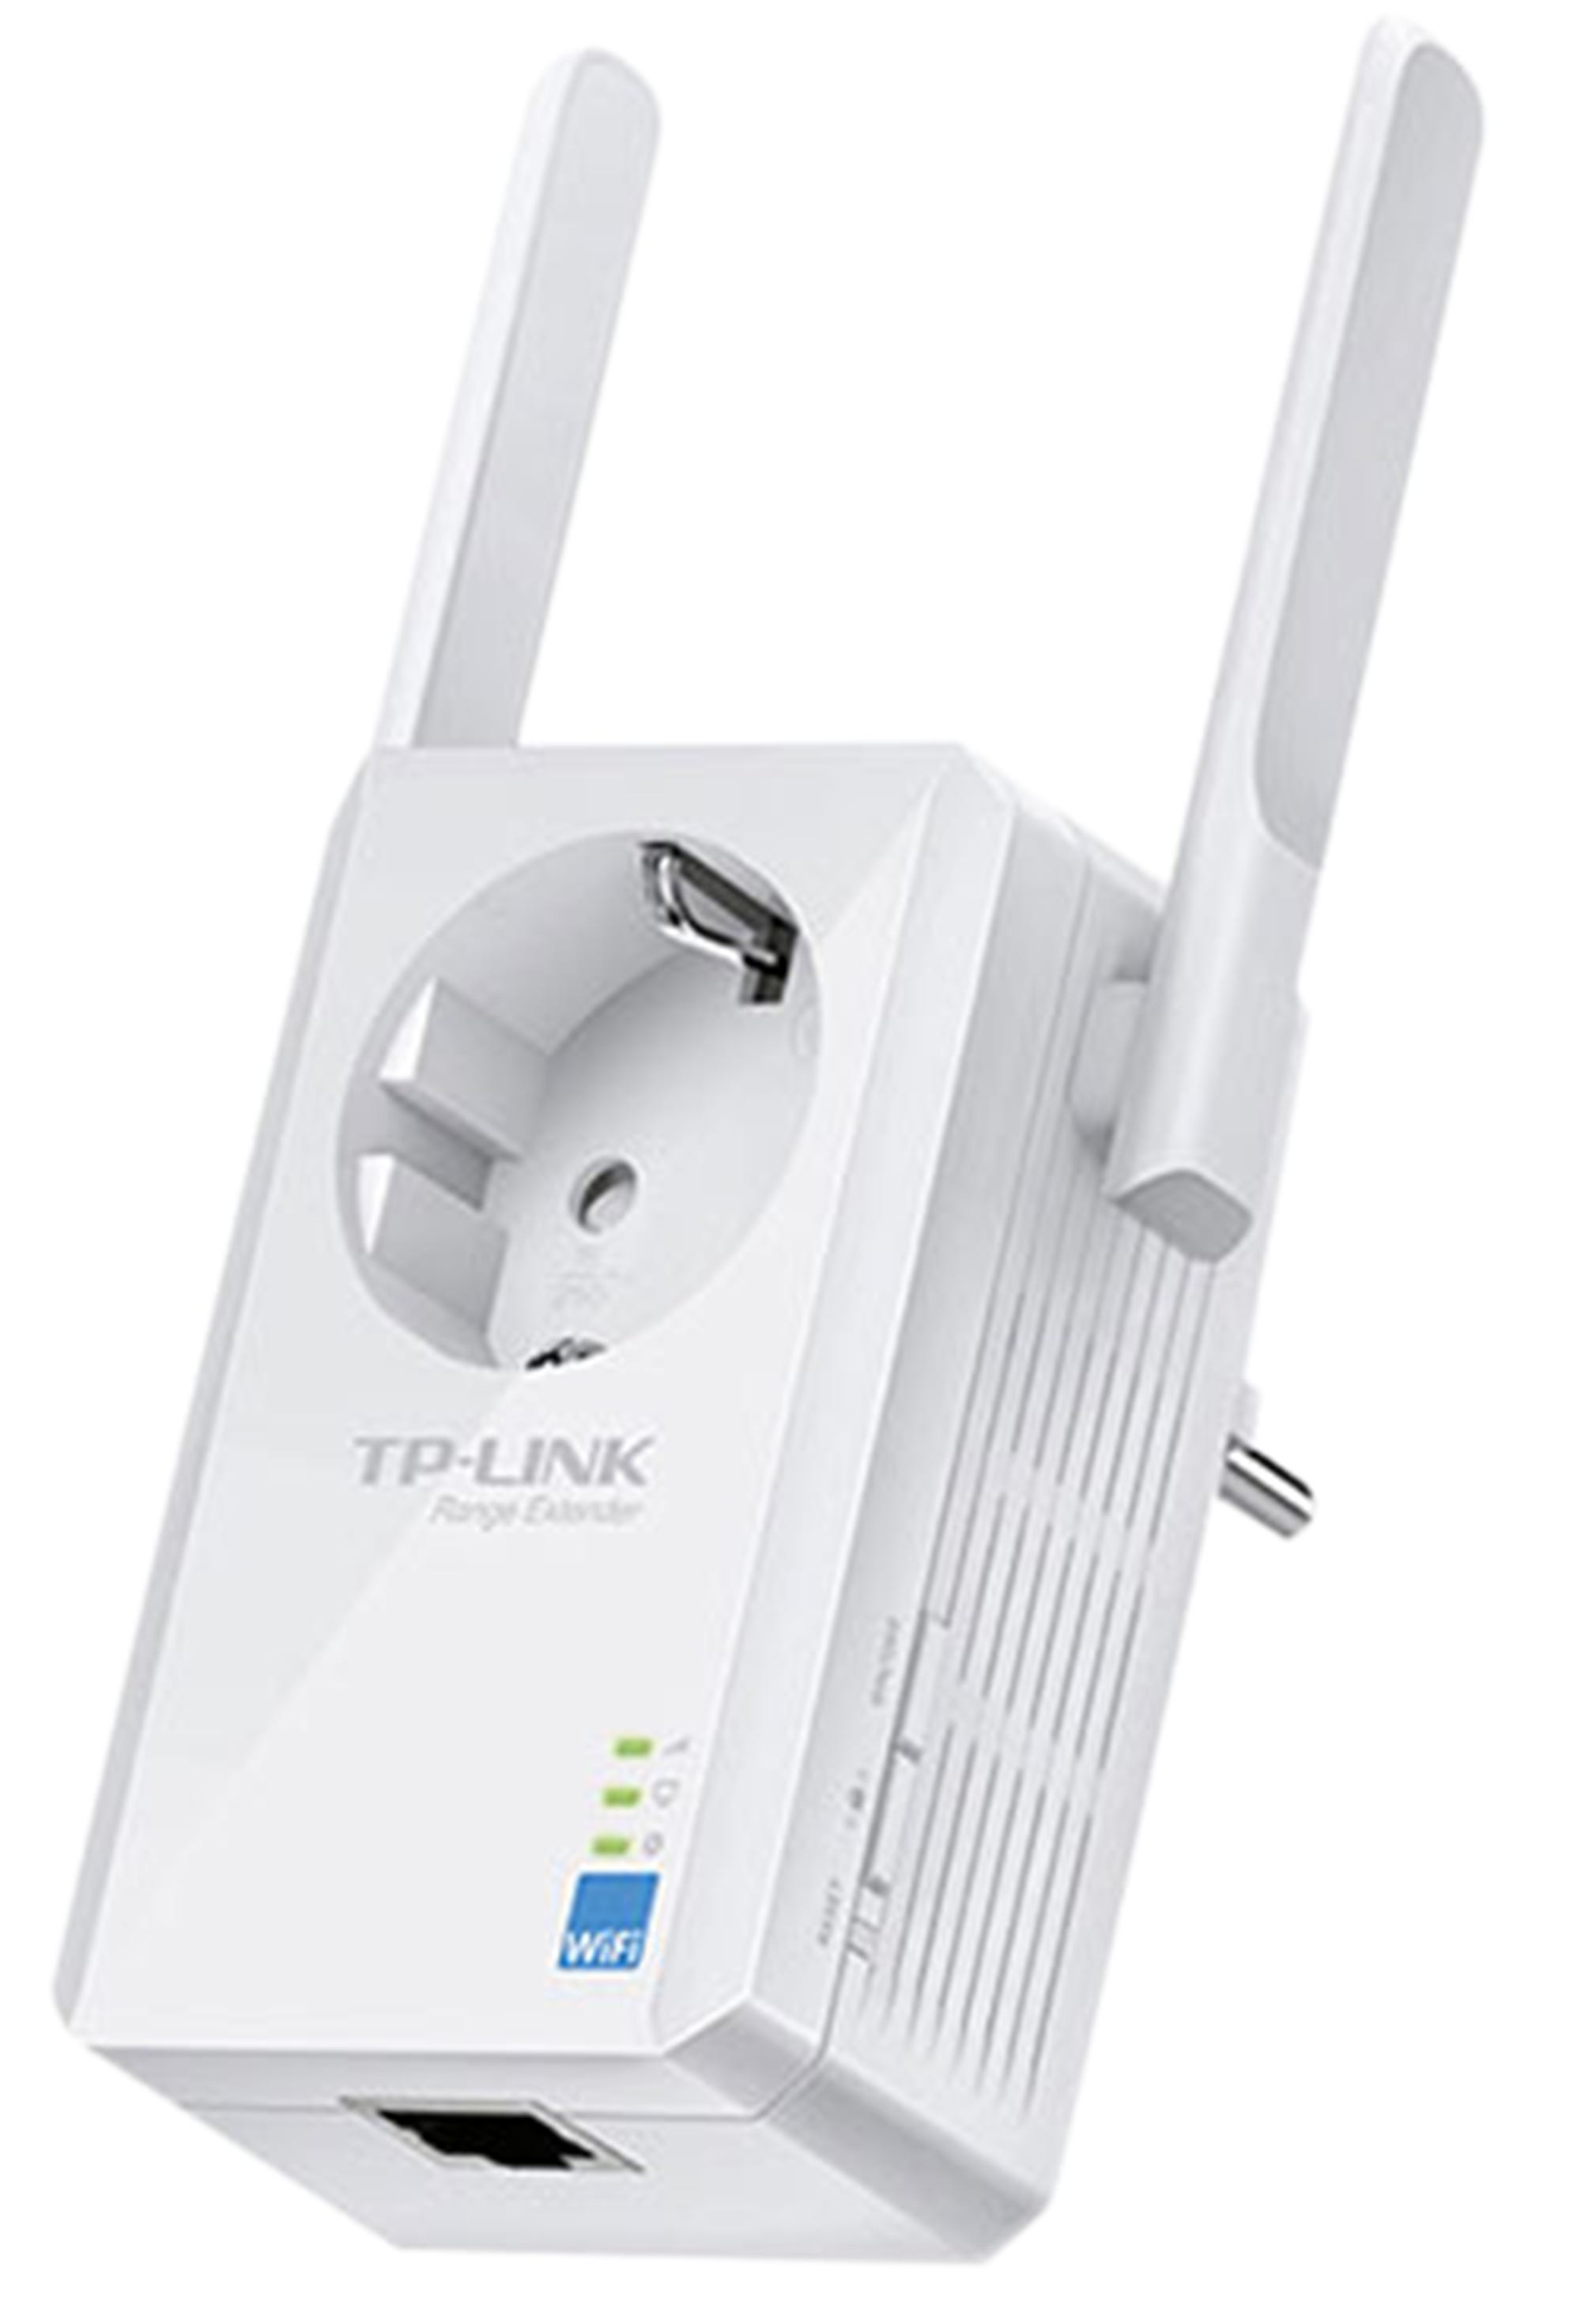 Repetidor inalámbrico TP-LINK 300 mbps